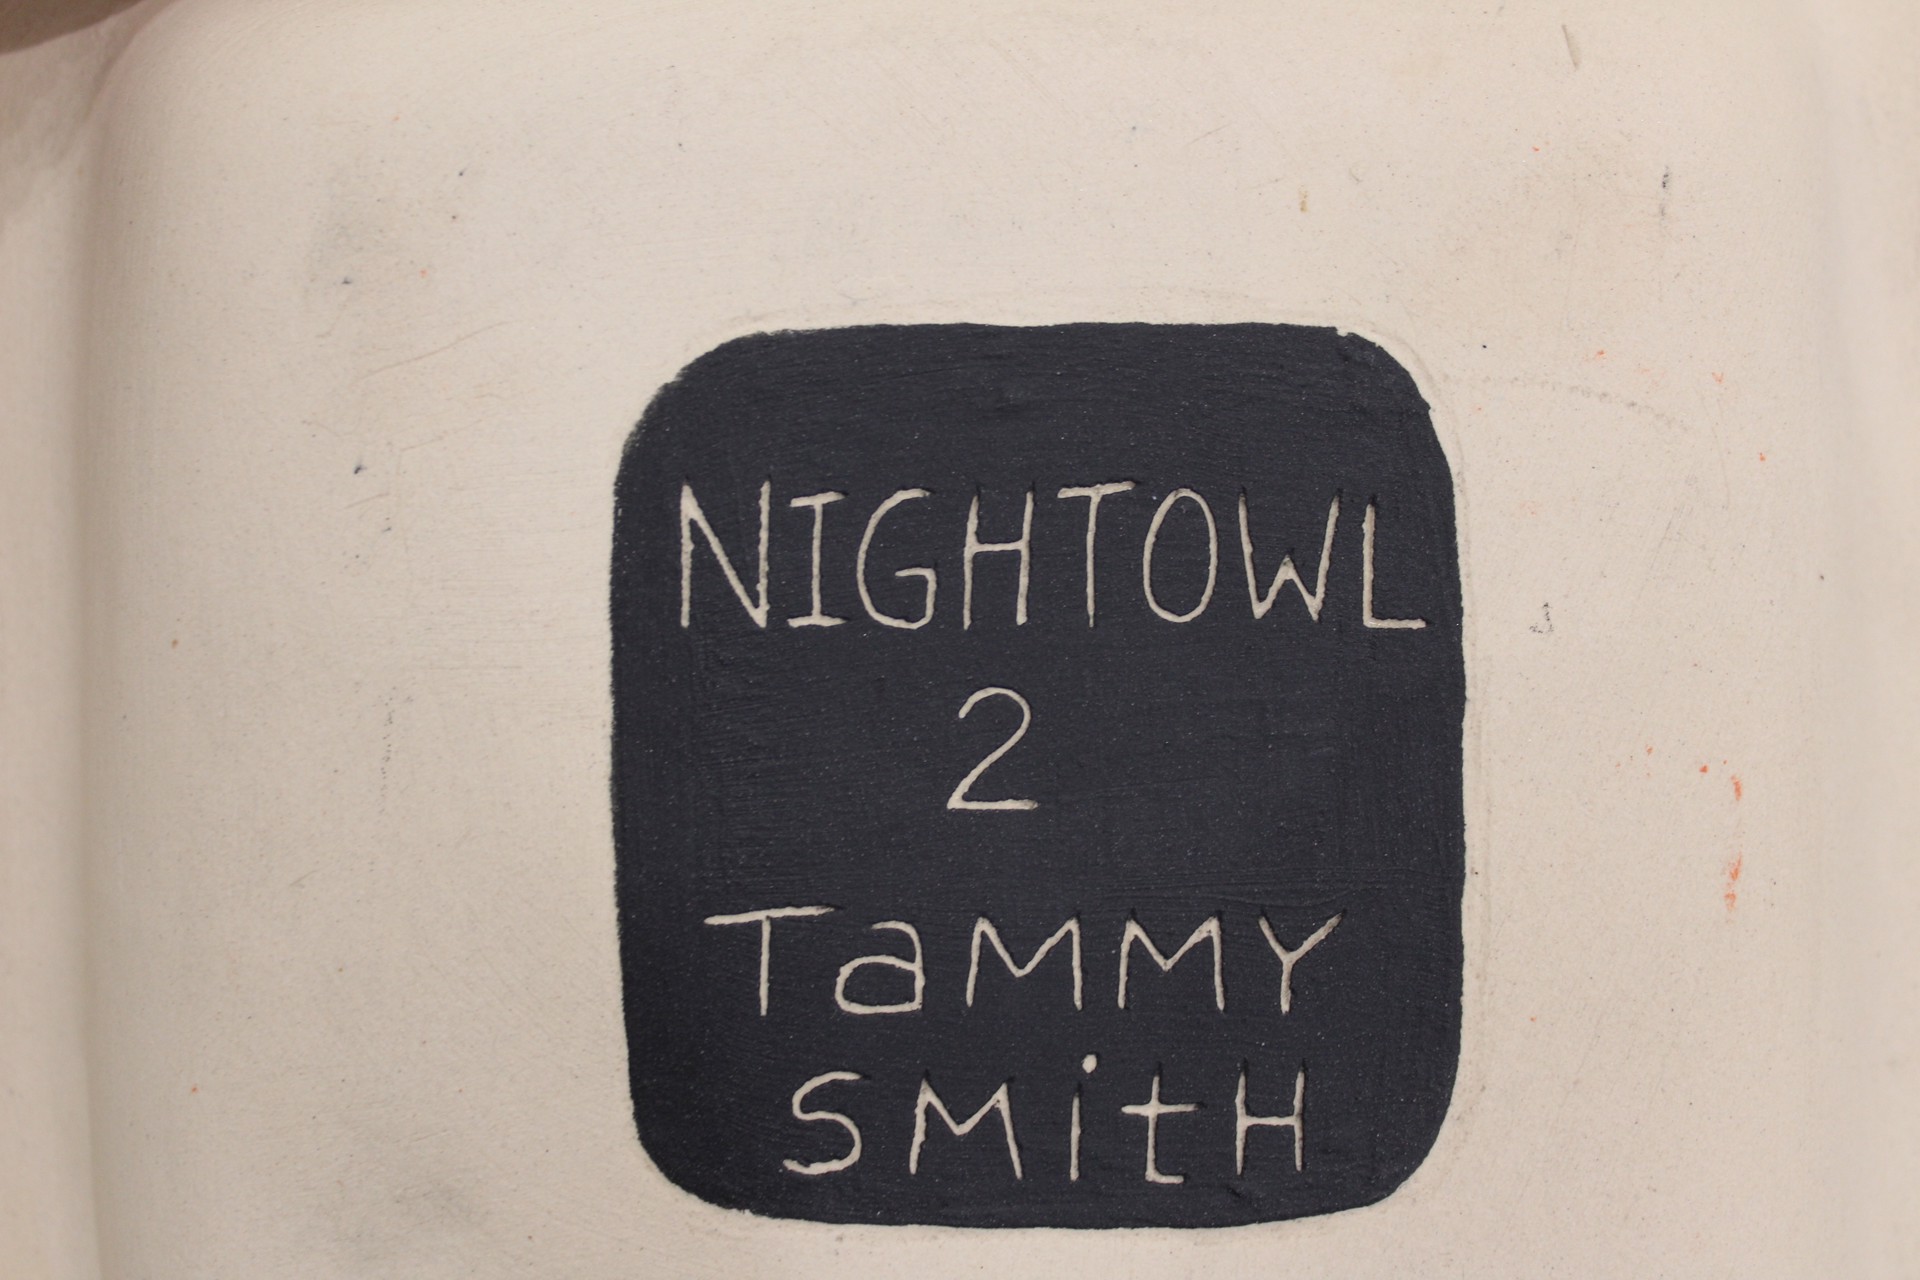 Small Owl Plate- Night Owl 2 by Tammy Smith